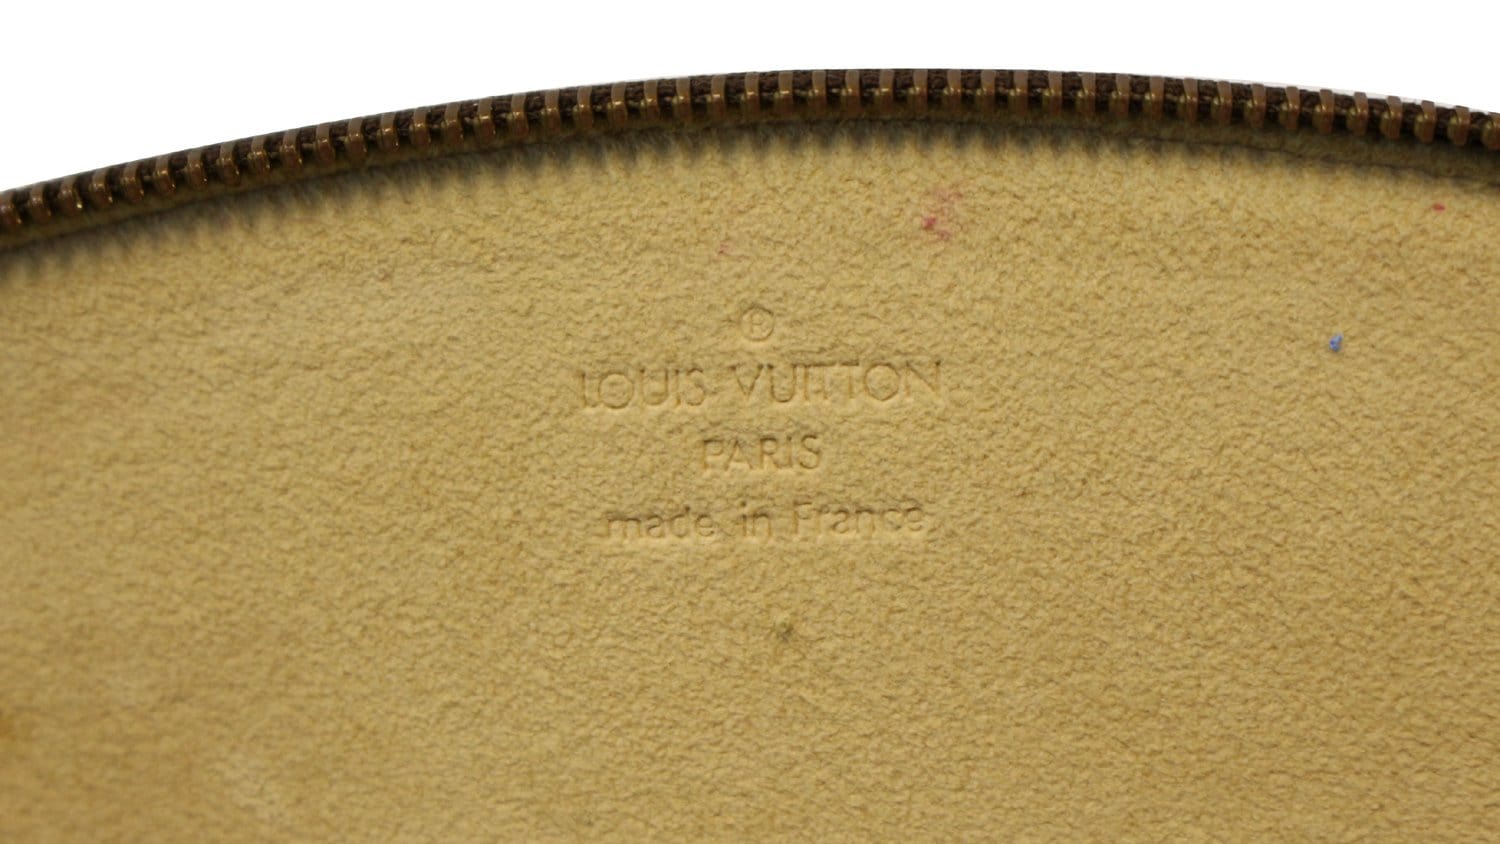 Louis Vuitton] Louis Vuitton Posh Monte Carlo Old Jewelry Case